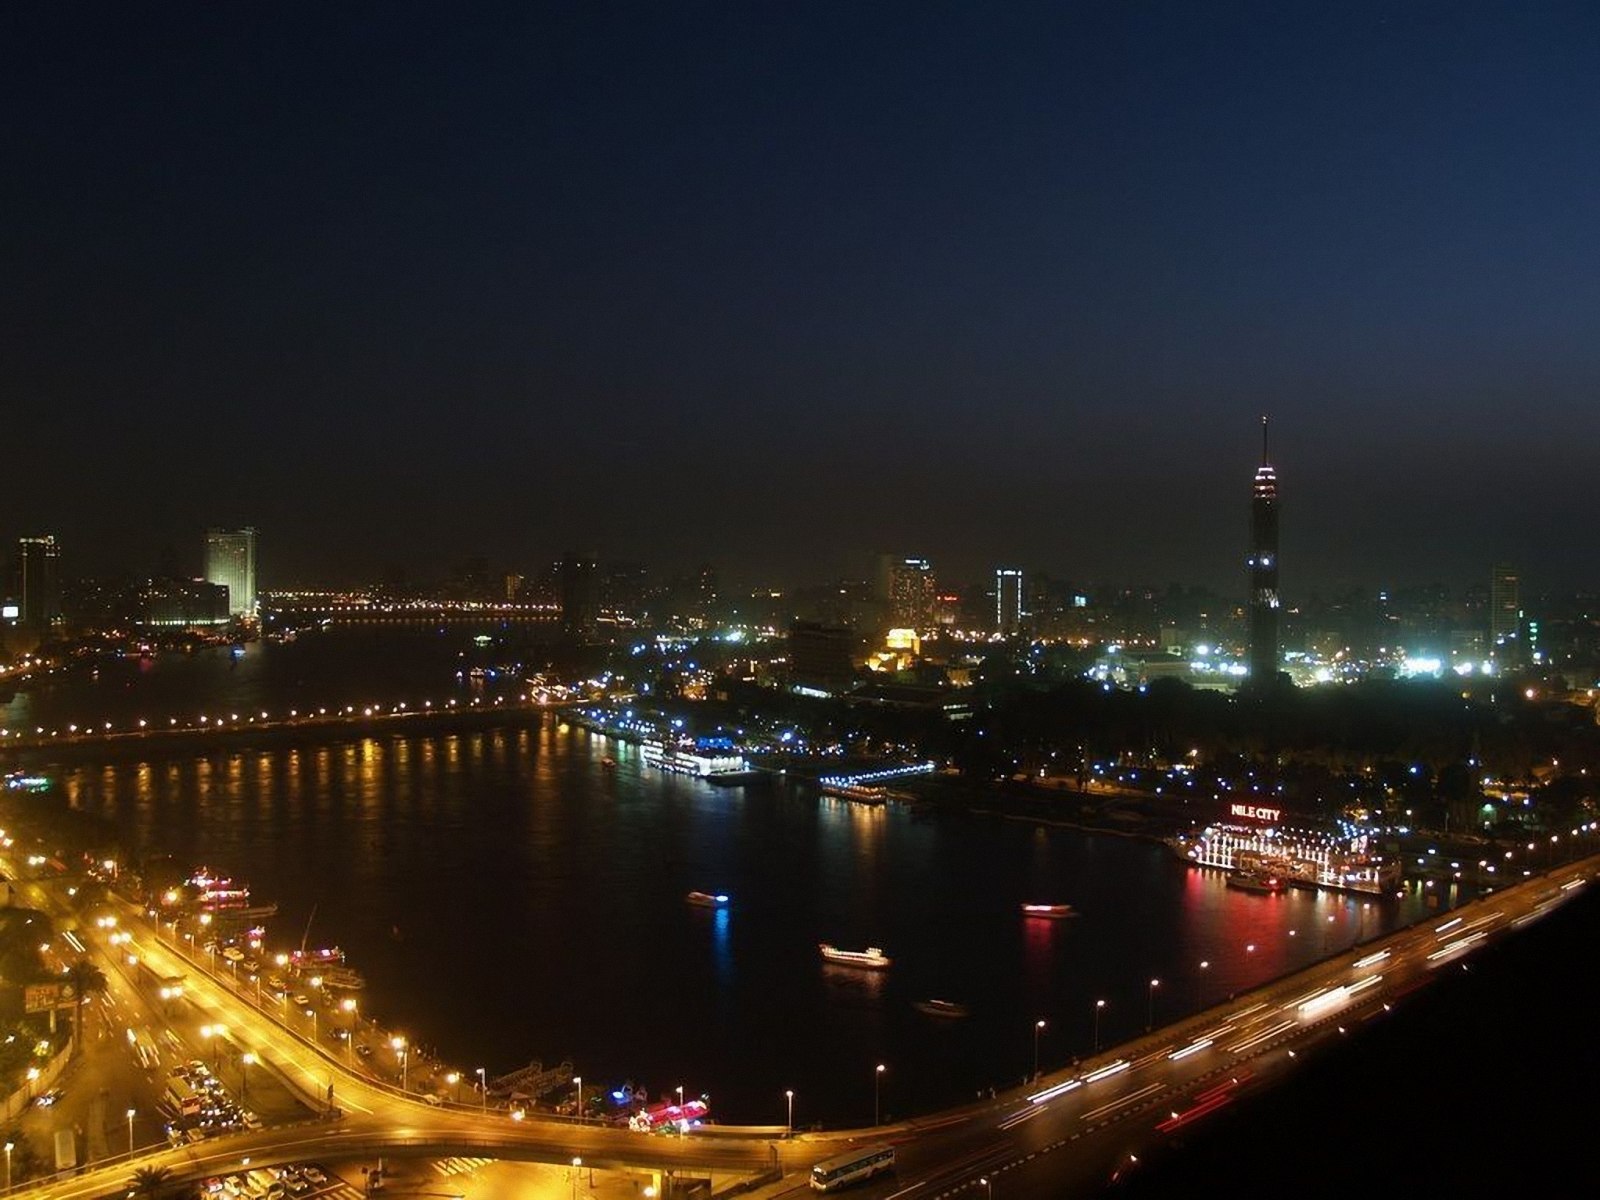 Cairo Night Scene Wallpaper Pictures